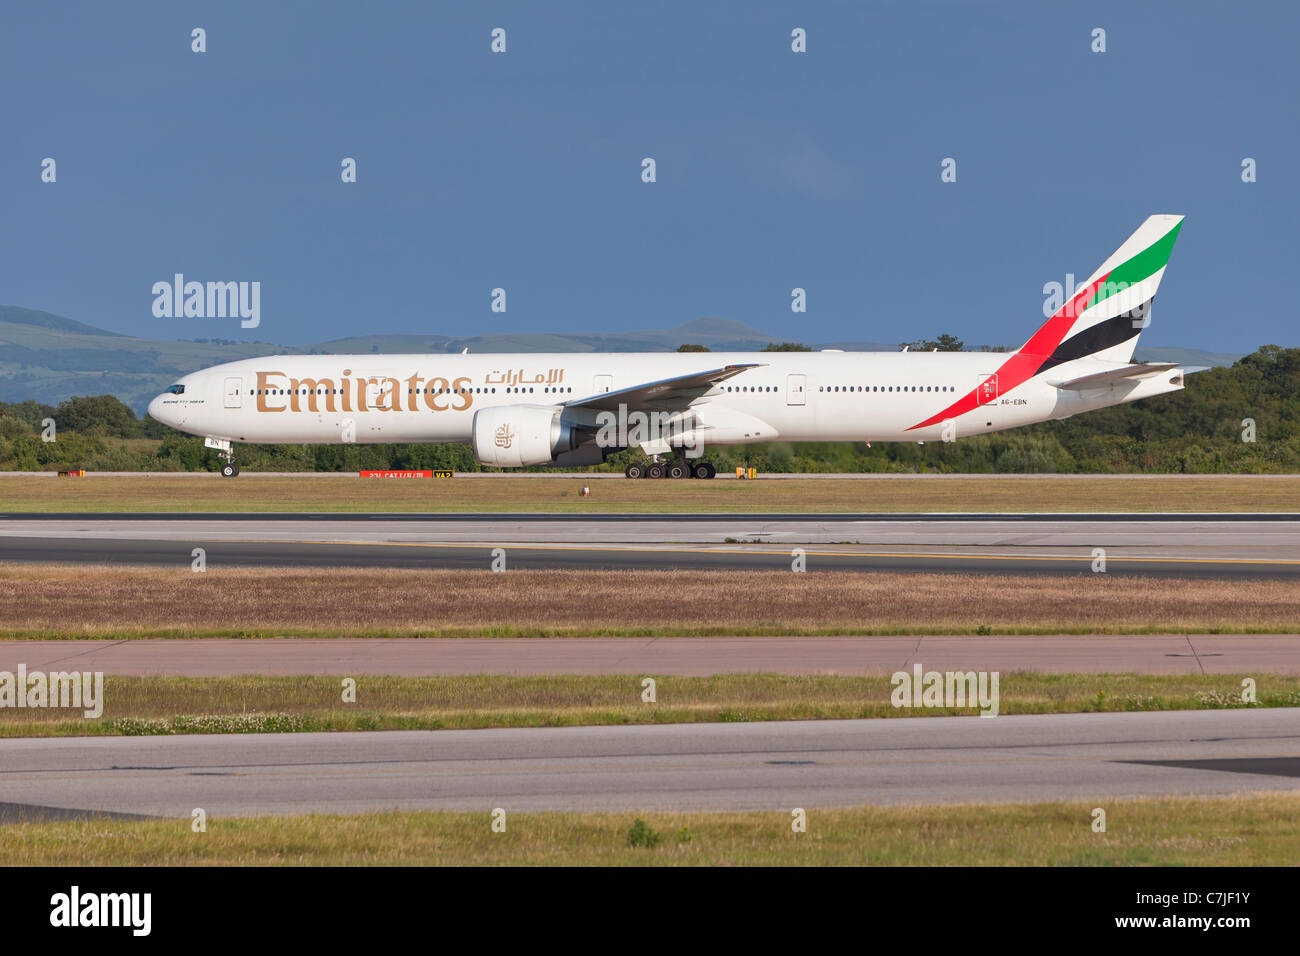 Emirates Airlines, l'avion Angleterre Banque D'Images